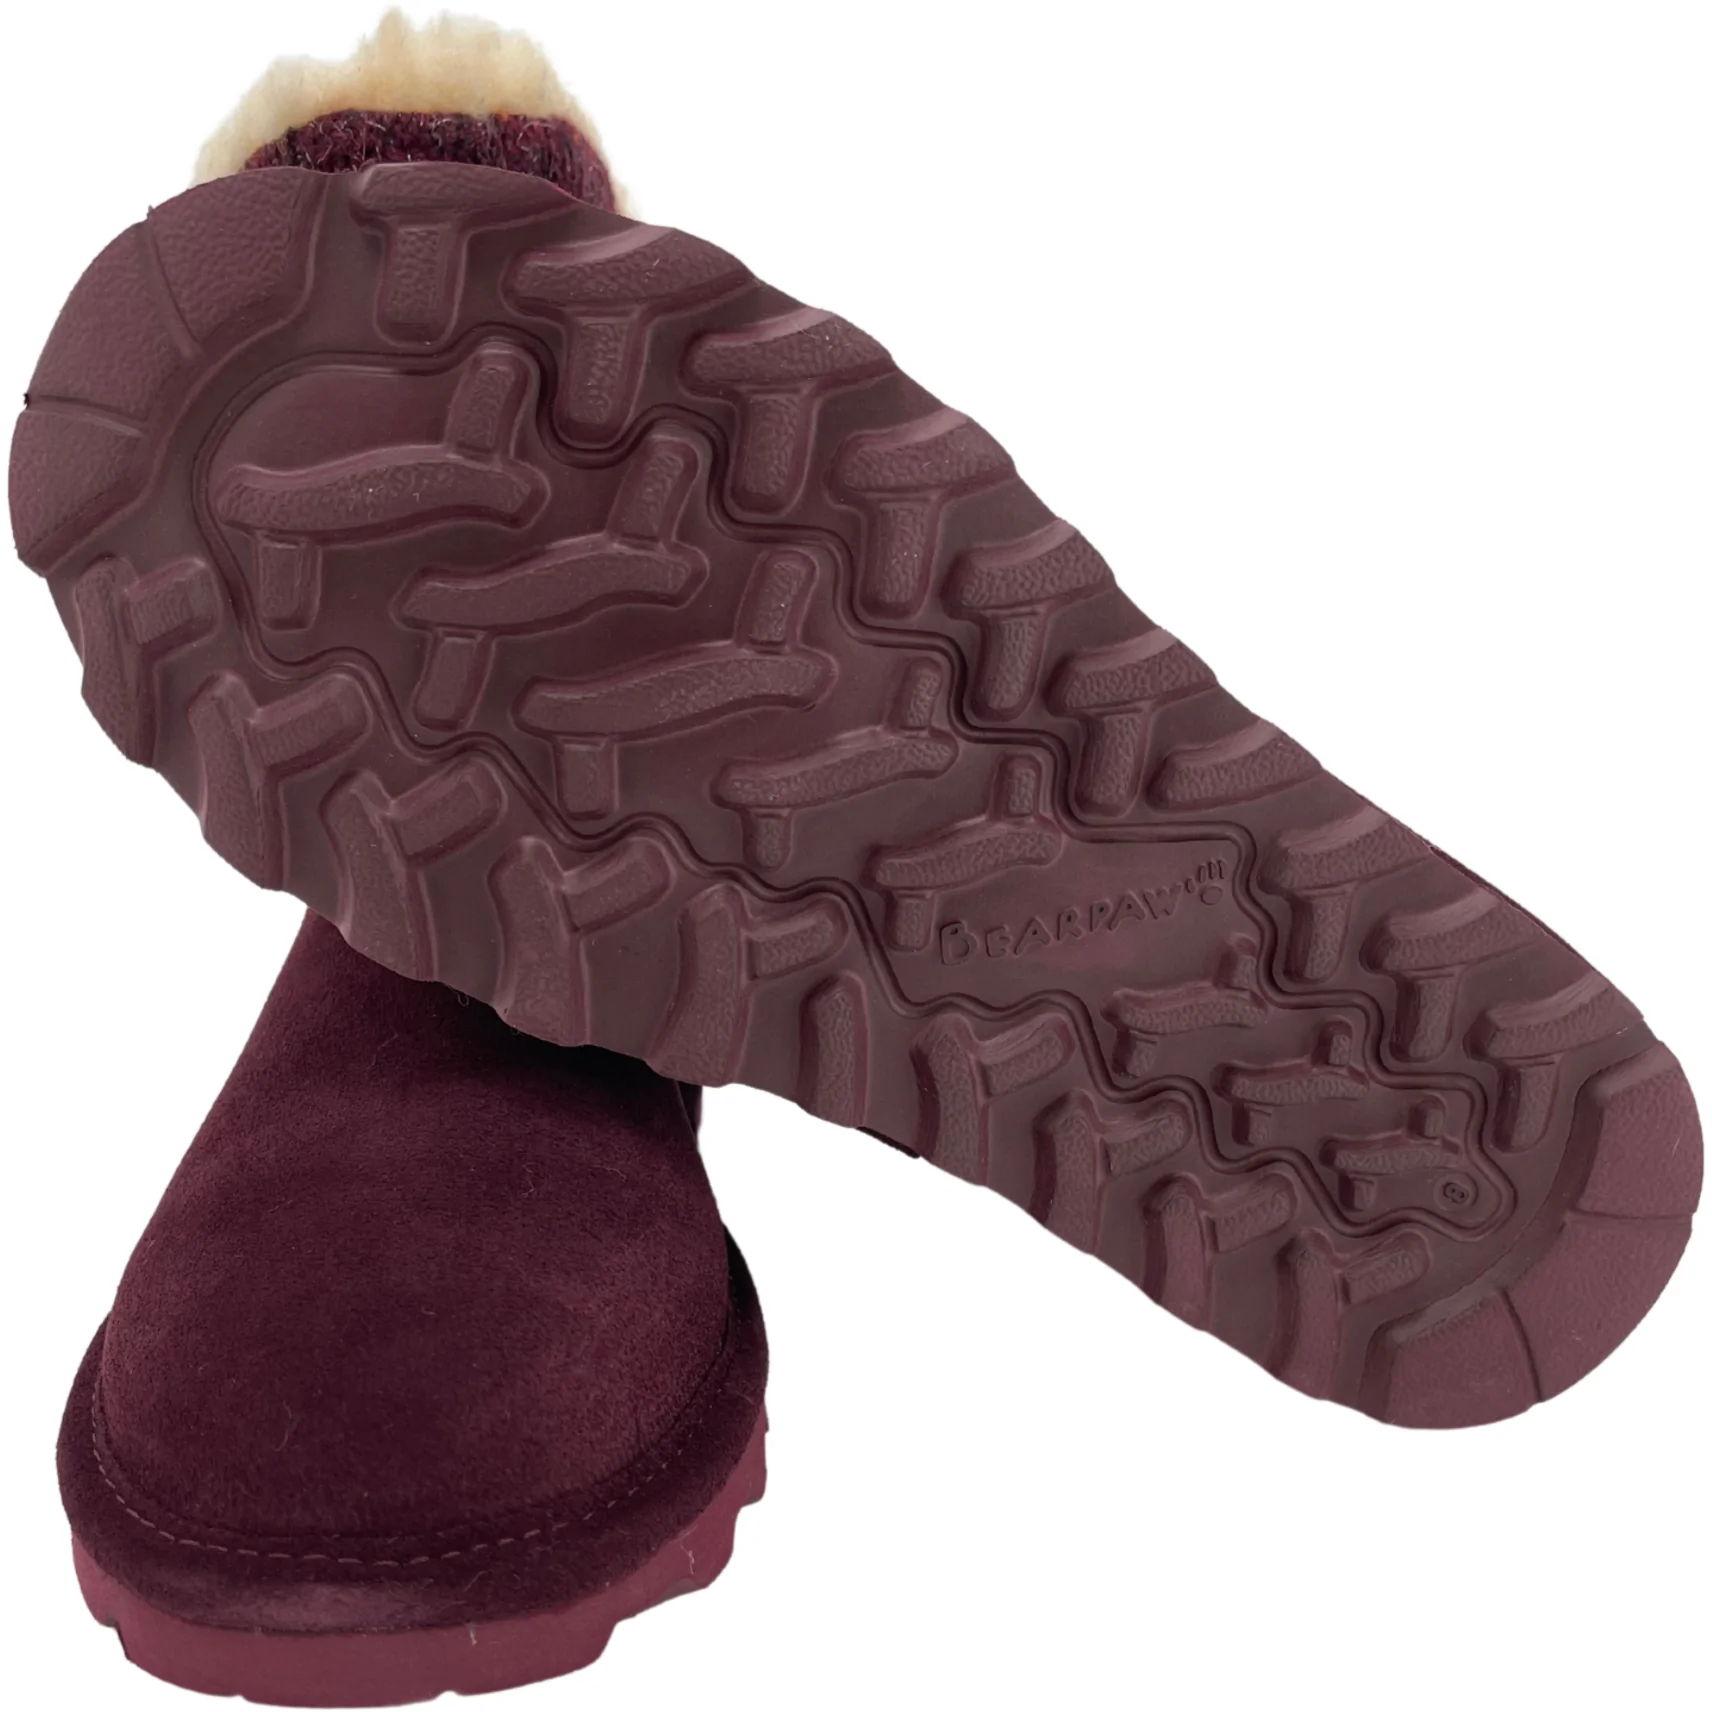 BearPaw Women's Winter Boots / Virginia / Wine / Short Boot / Size 8 **No Tags**